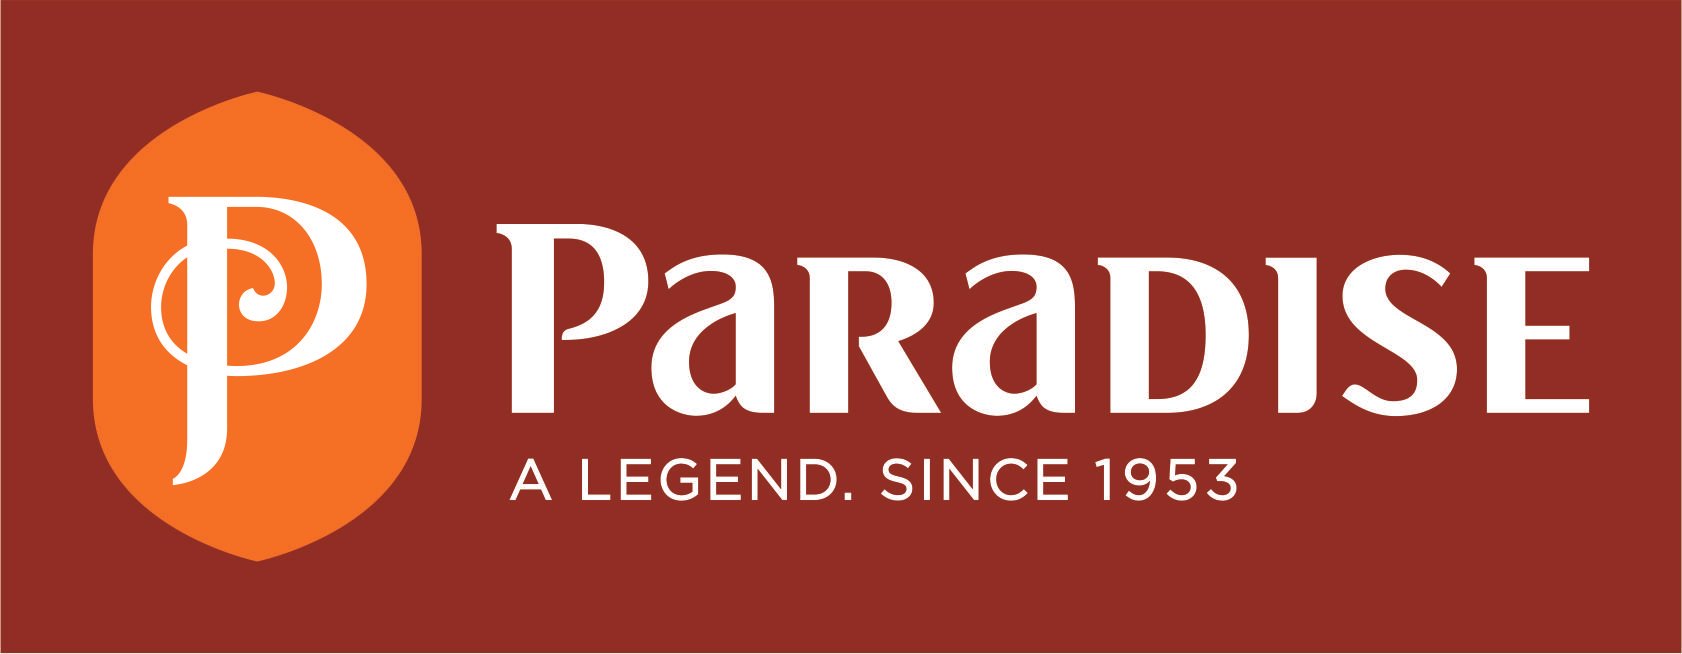 Paradise Restaurant Logo - Paradise logos | Paradise biryani | Best restaurants in india